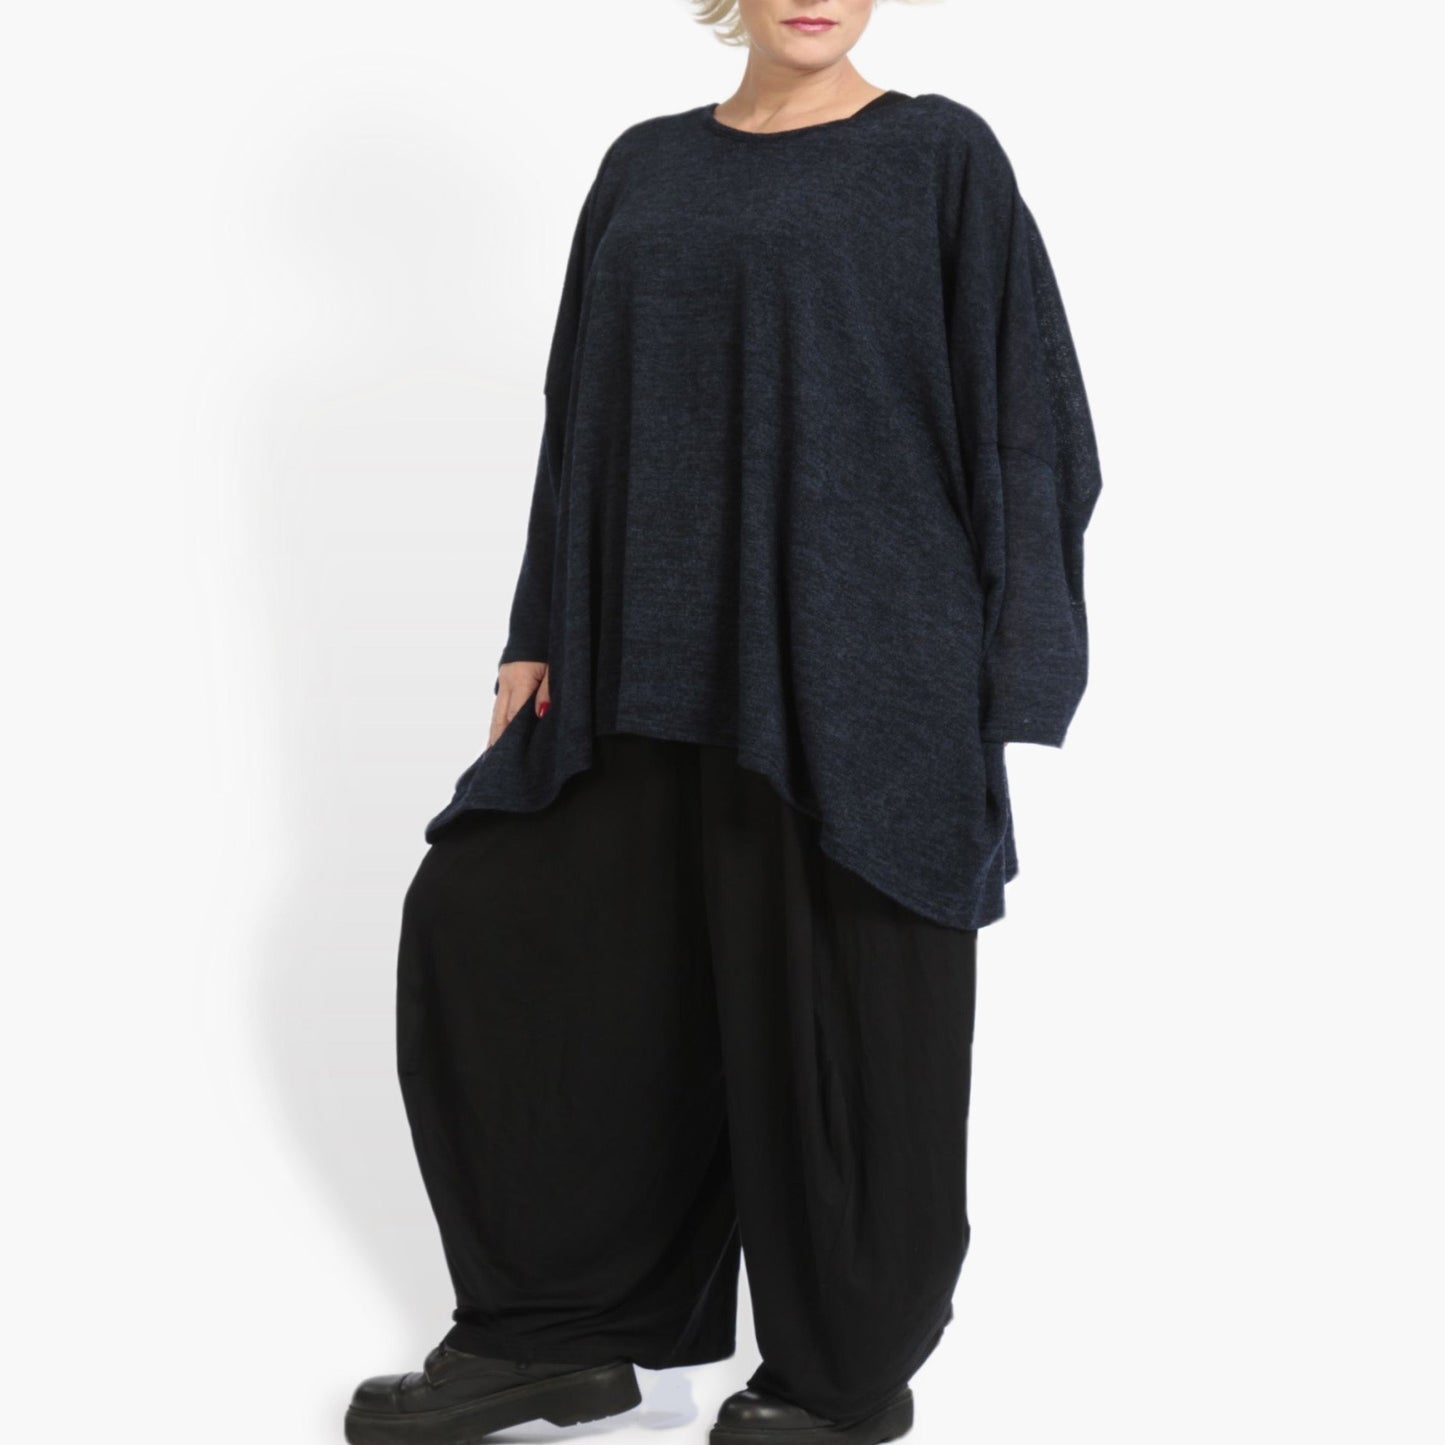 Everyday big shirt in a boxy shape made of light, fine knit quality, Yuki in dark blue